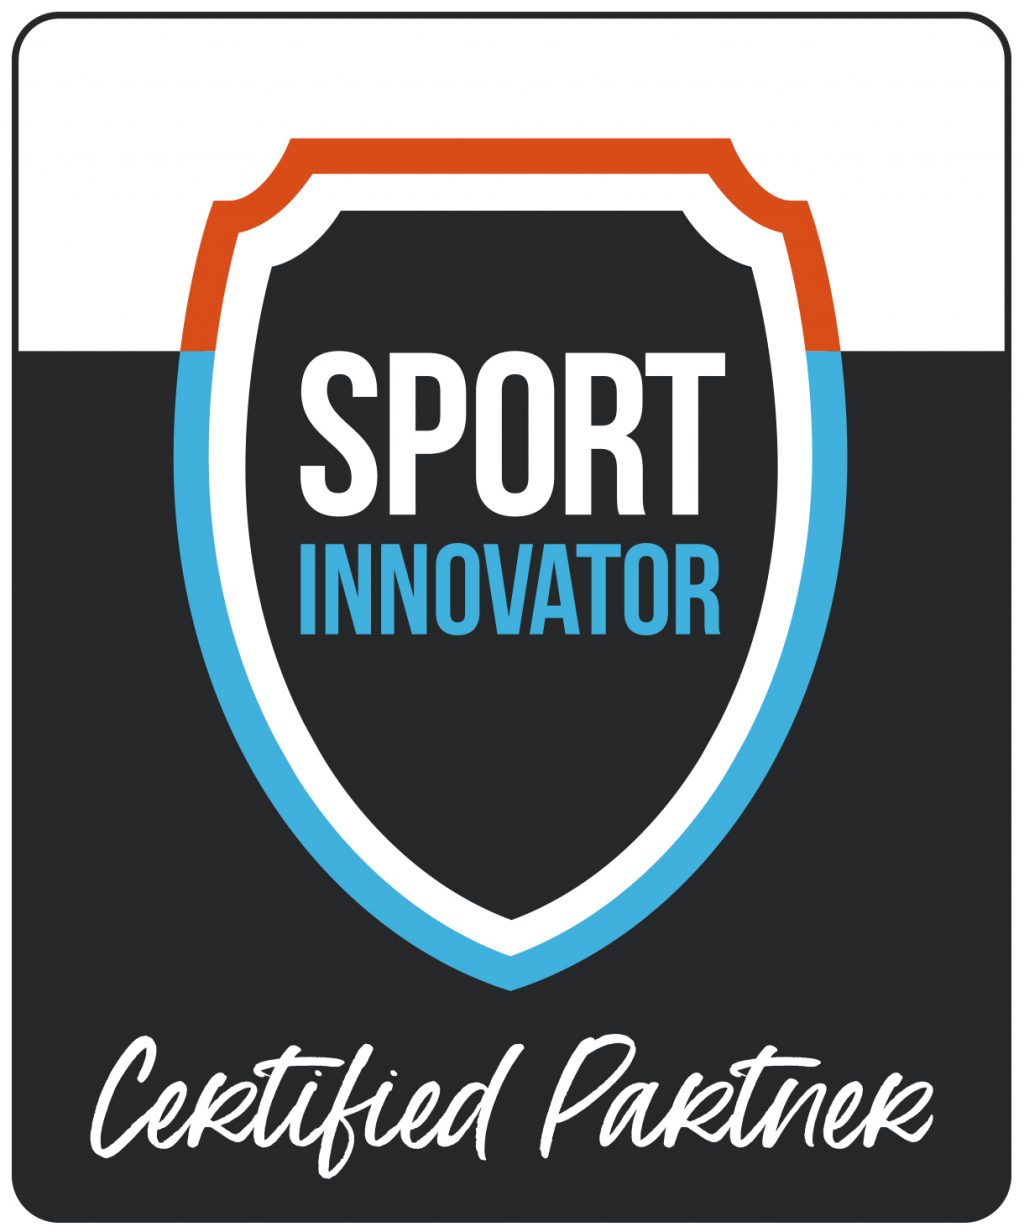 Sport innovator certified partner